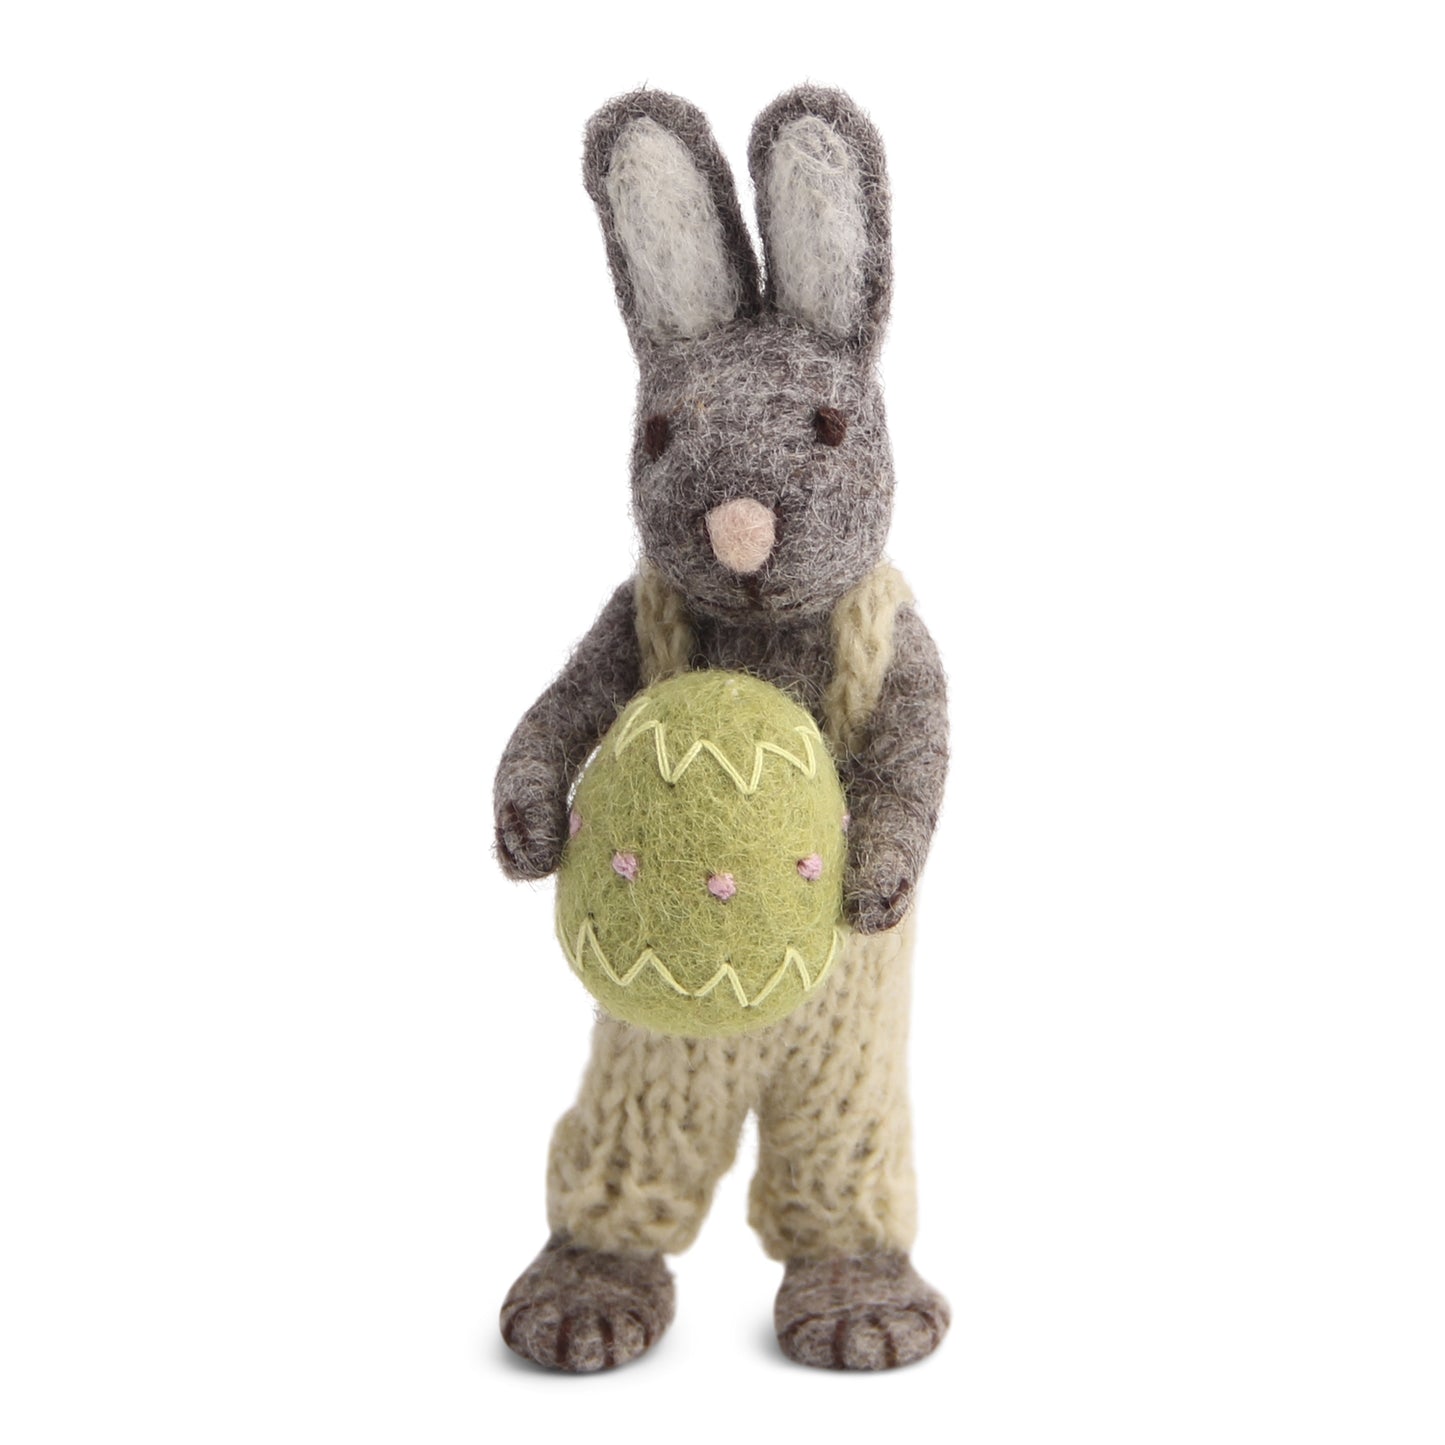 Gry & Sif Bunny Small Grey pants & green egg